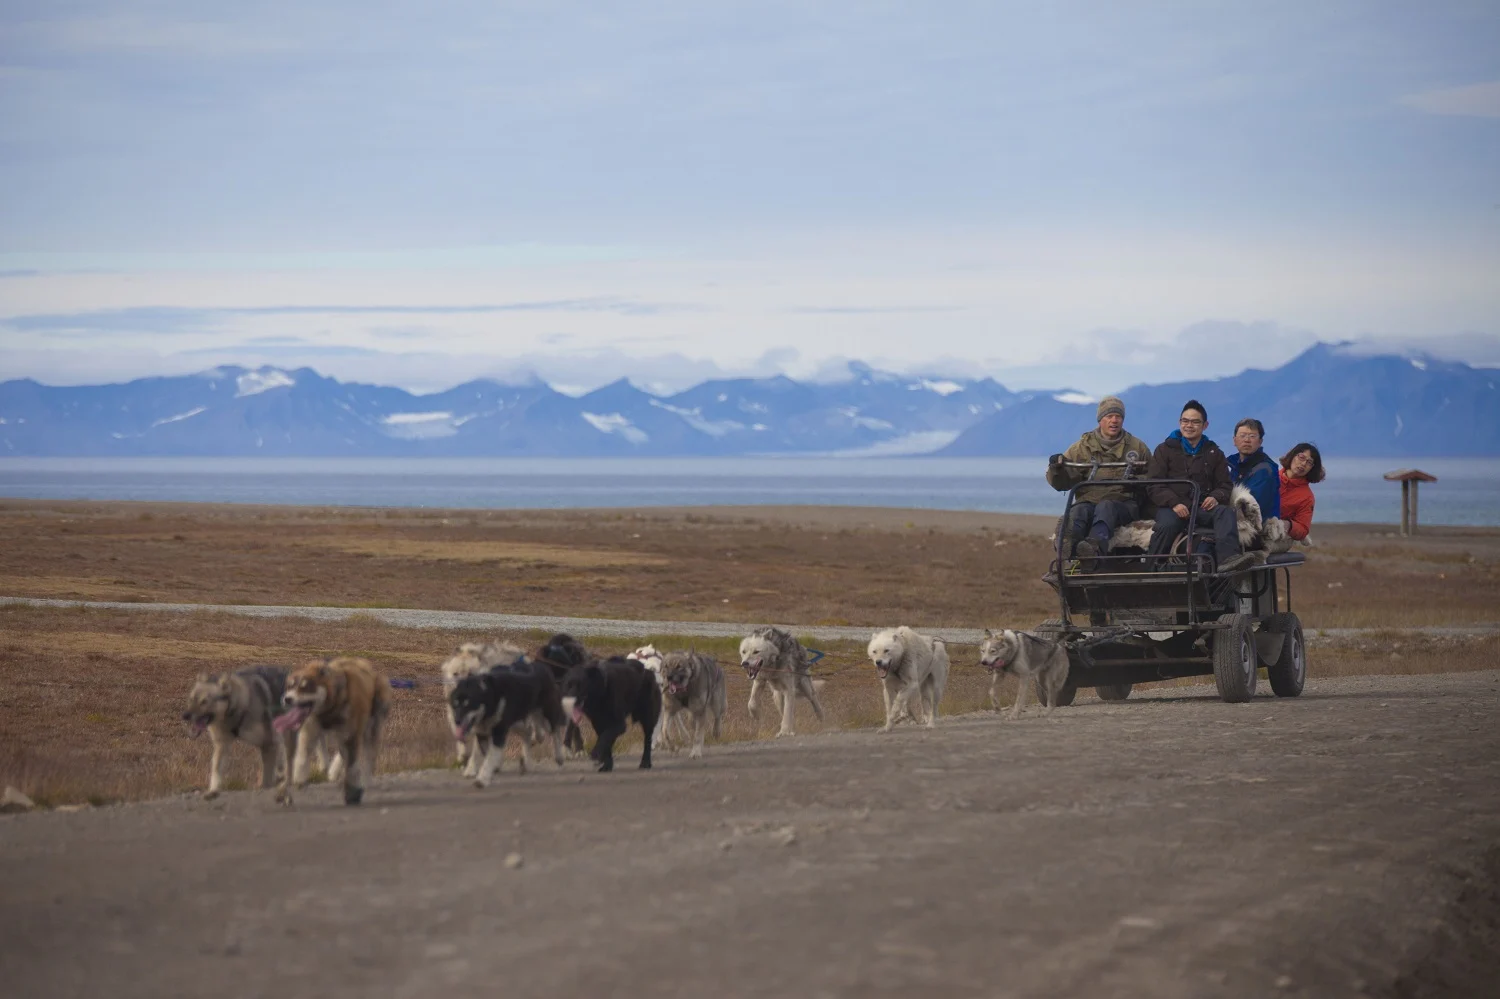 A husky wagon ride excursion in Longyearbyen, Svalbard